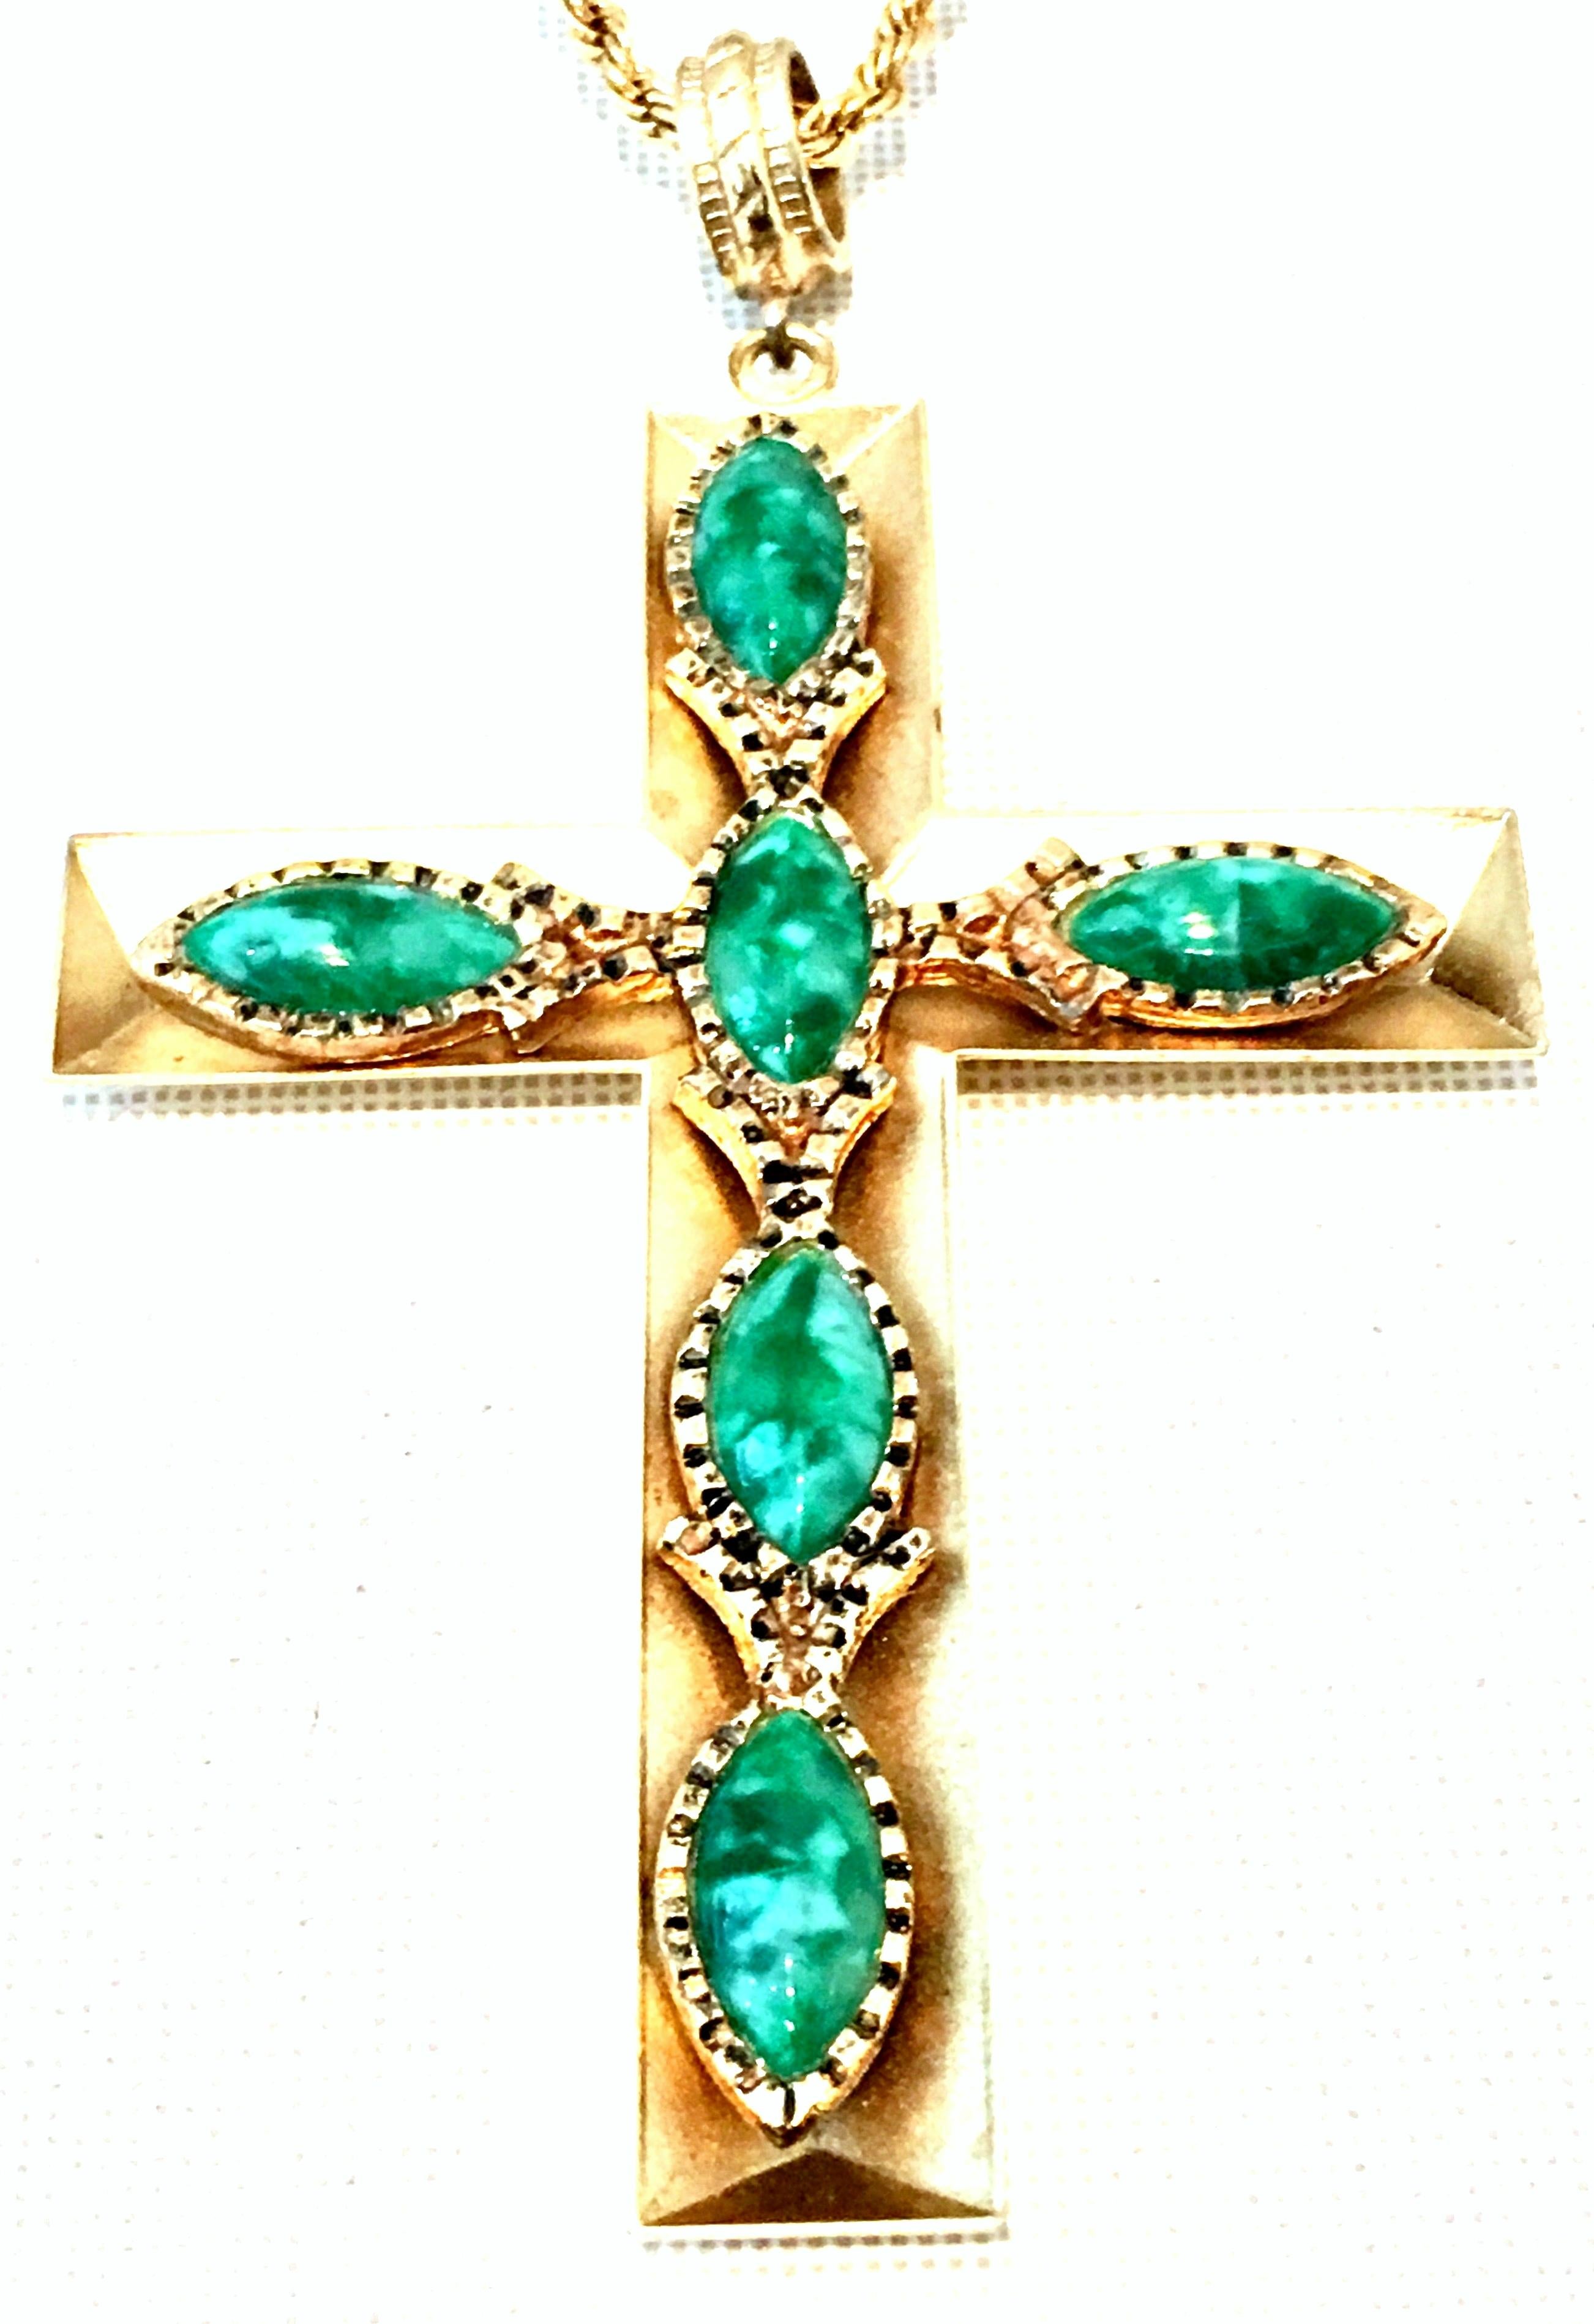 20th Century Gold & Faux Malachite Crucifix Pendant Necklace By, Trifari For Sale 1